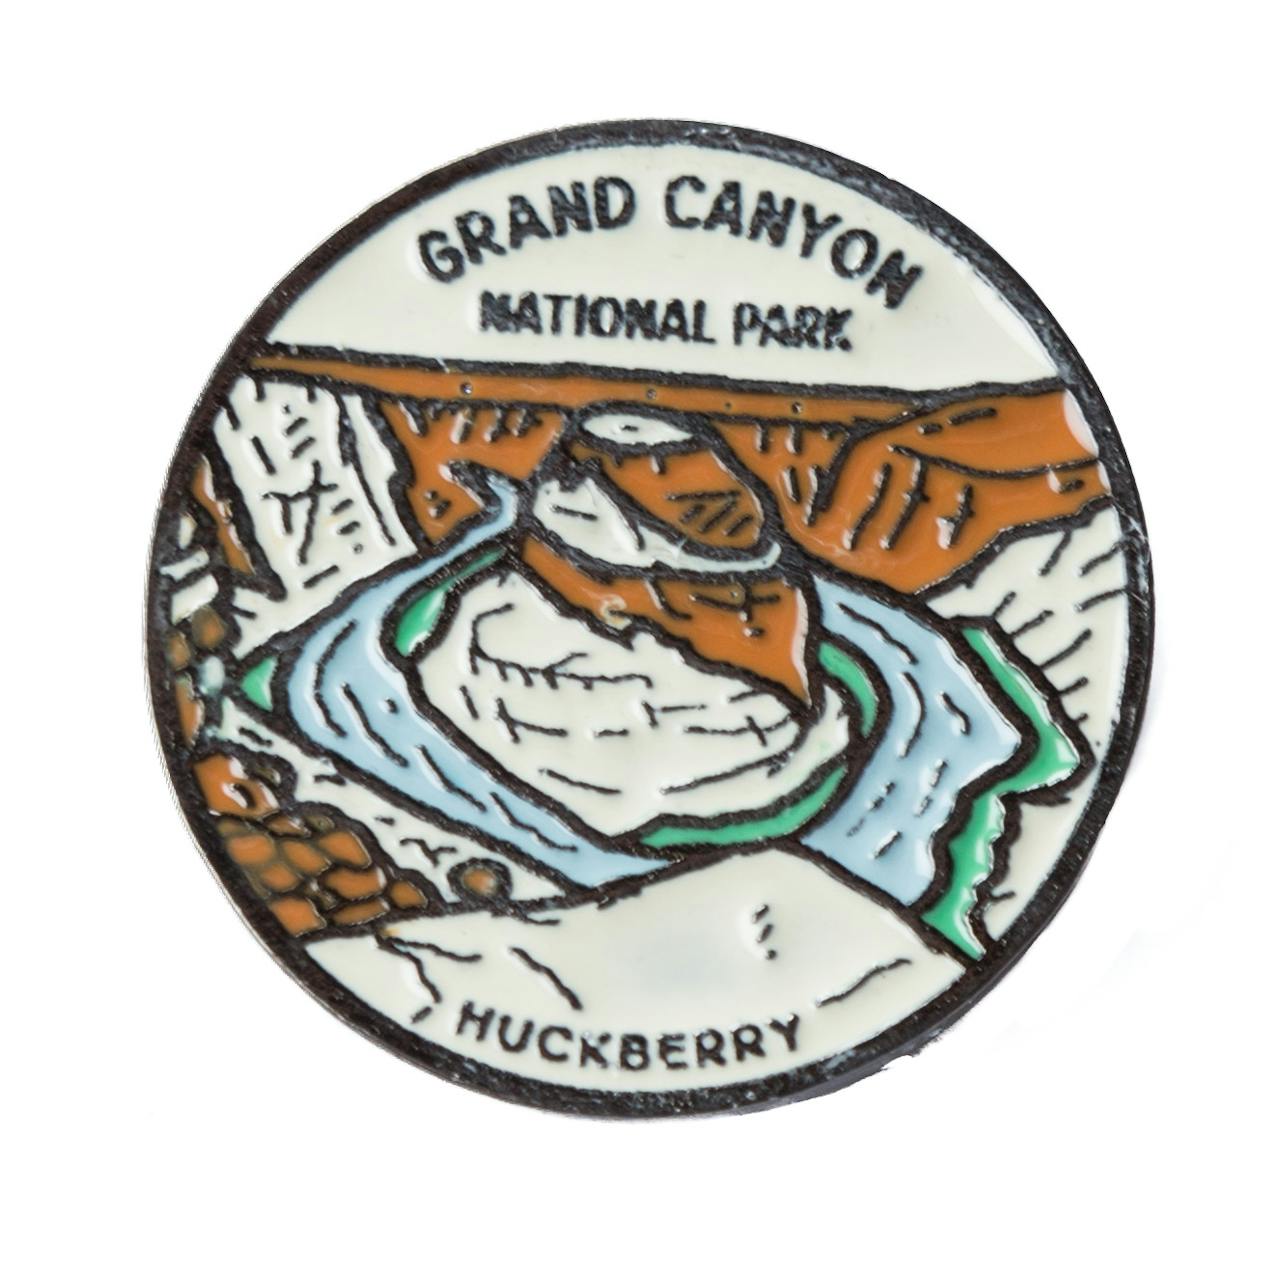 Huckberry Grand Canyon National Park Pin